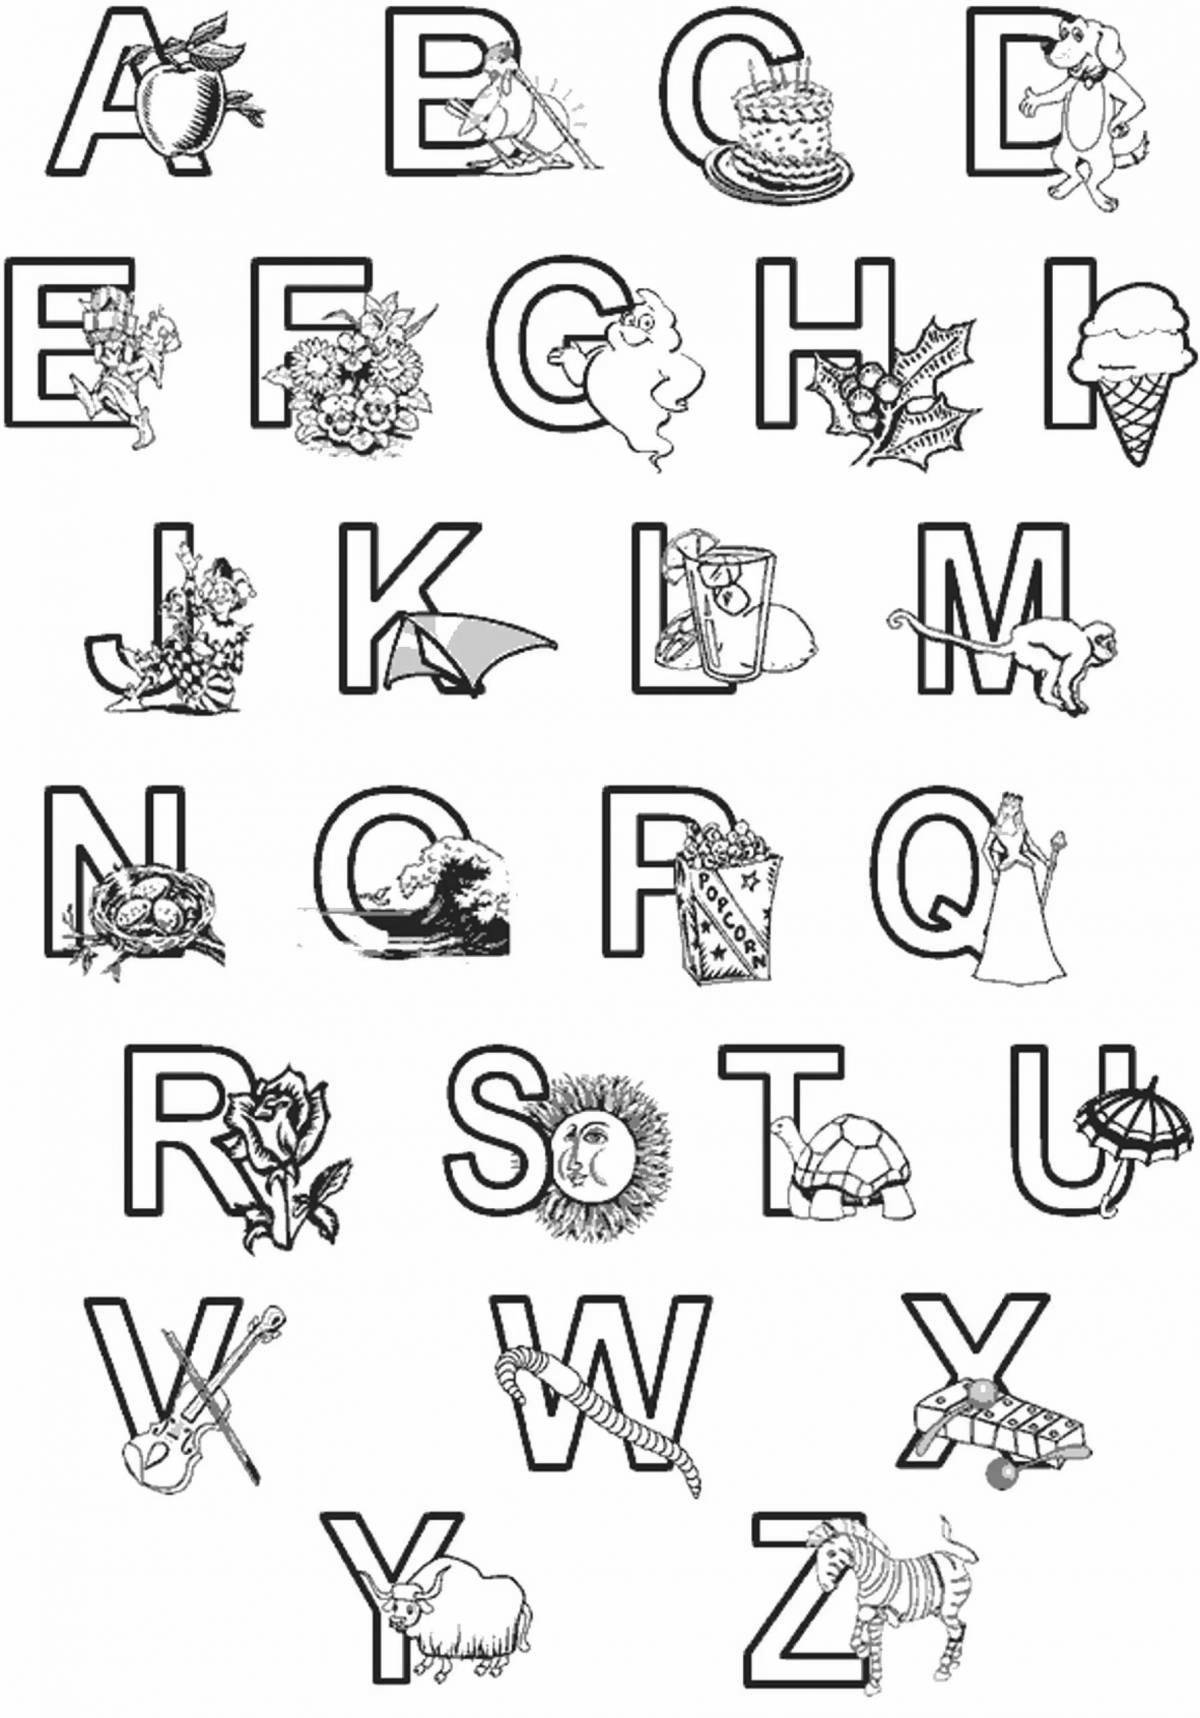 Magic alphabet with eyes